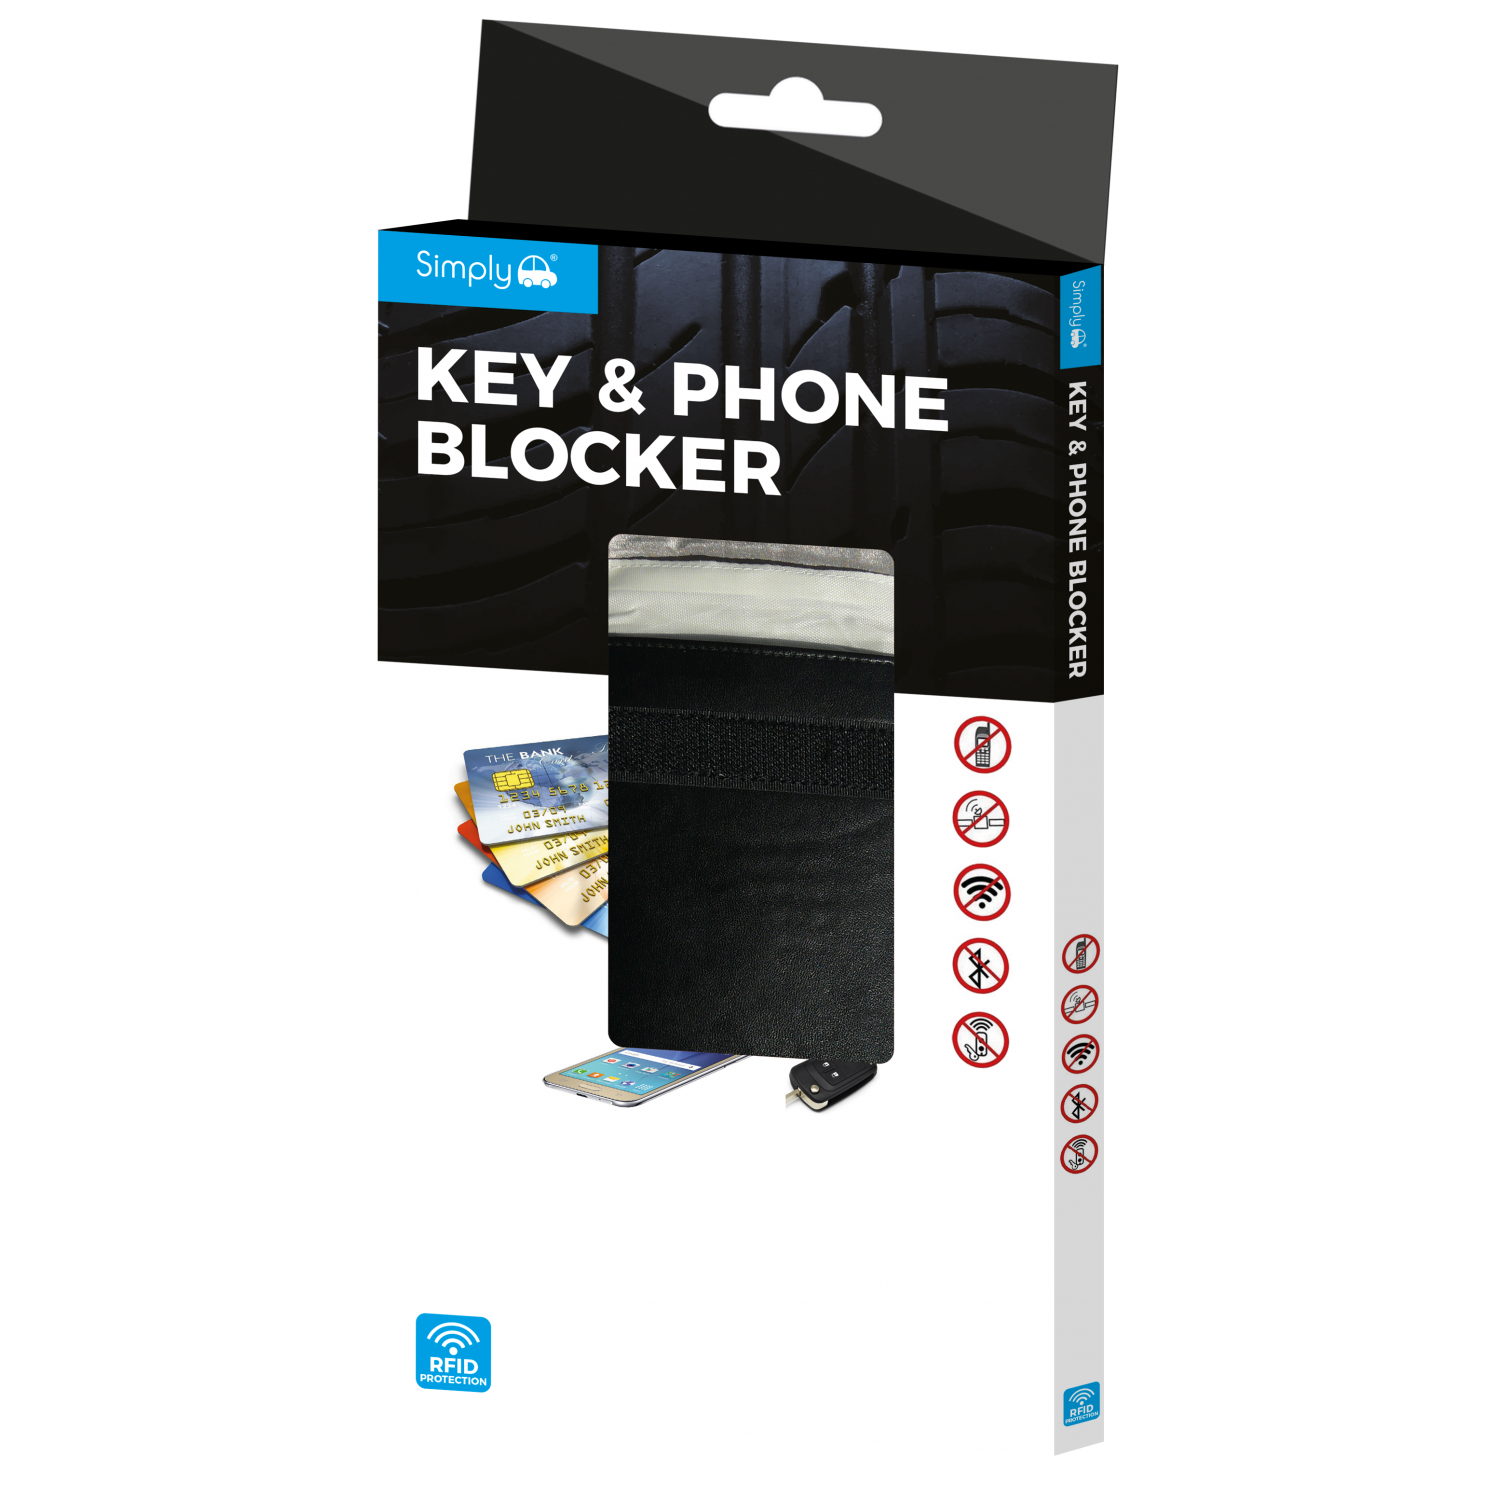 SIMPLY AUTO RFID KEY & PHONE BLOCKER